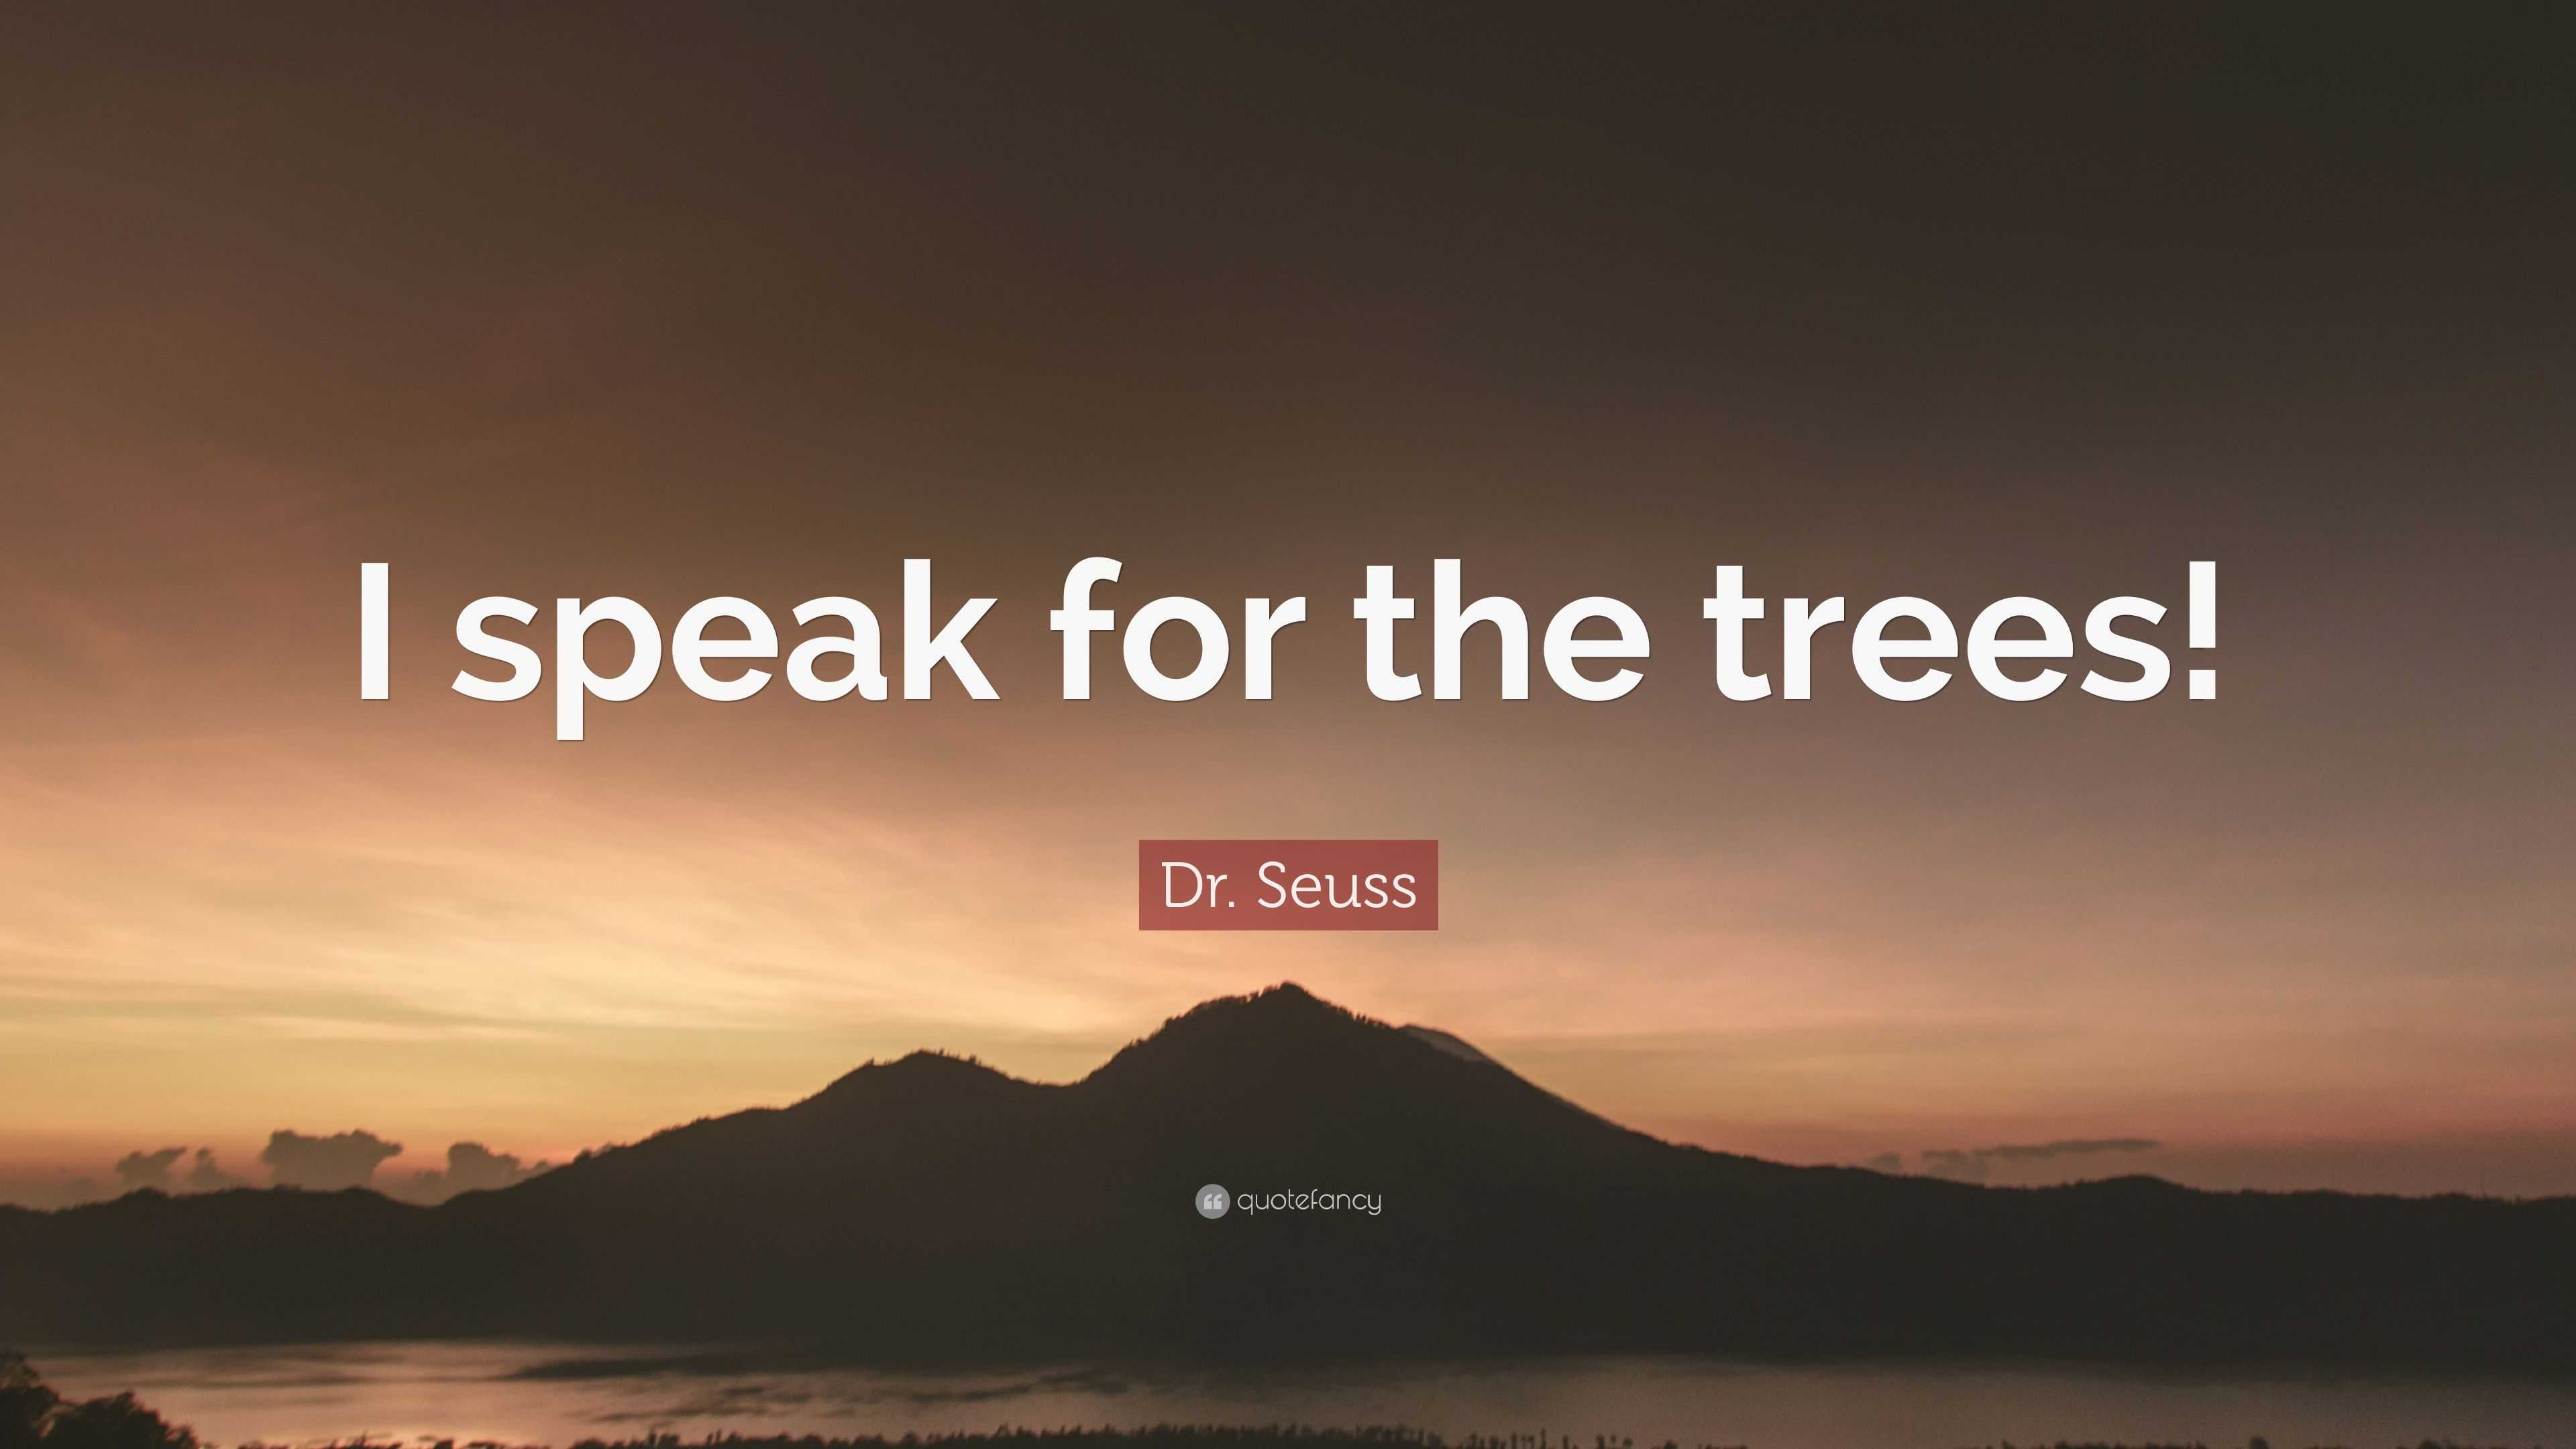 Speaking tree